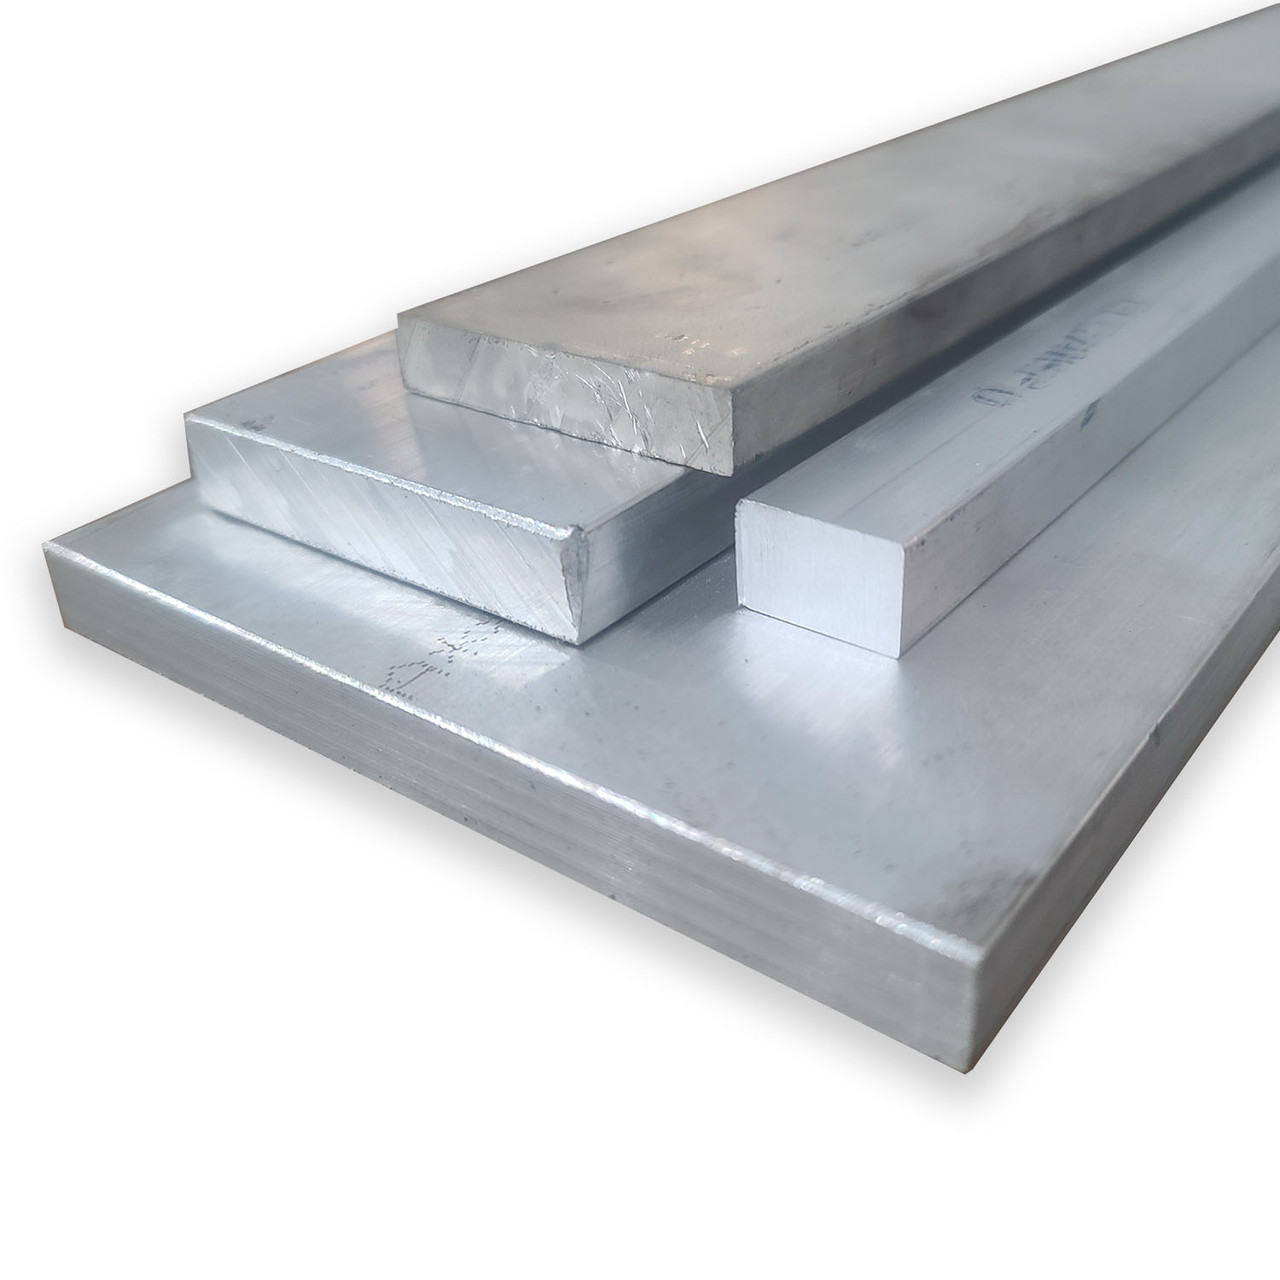 1.75" x 2" x 48", 2024-T351 Aluminum Flat Bar